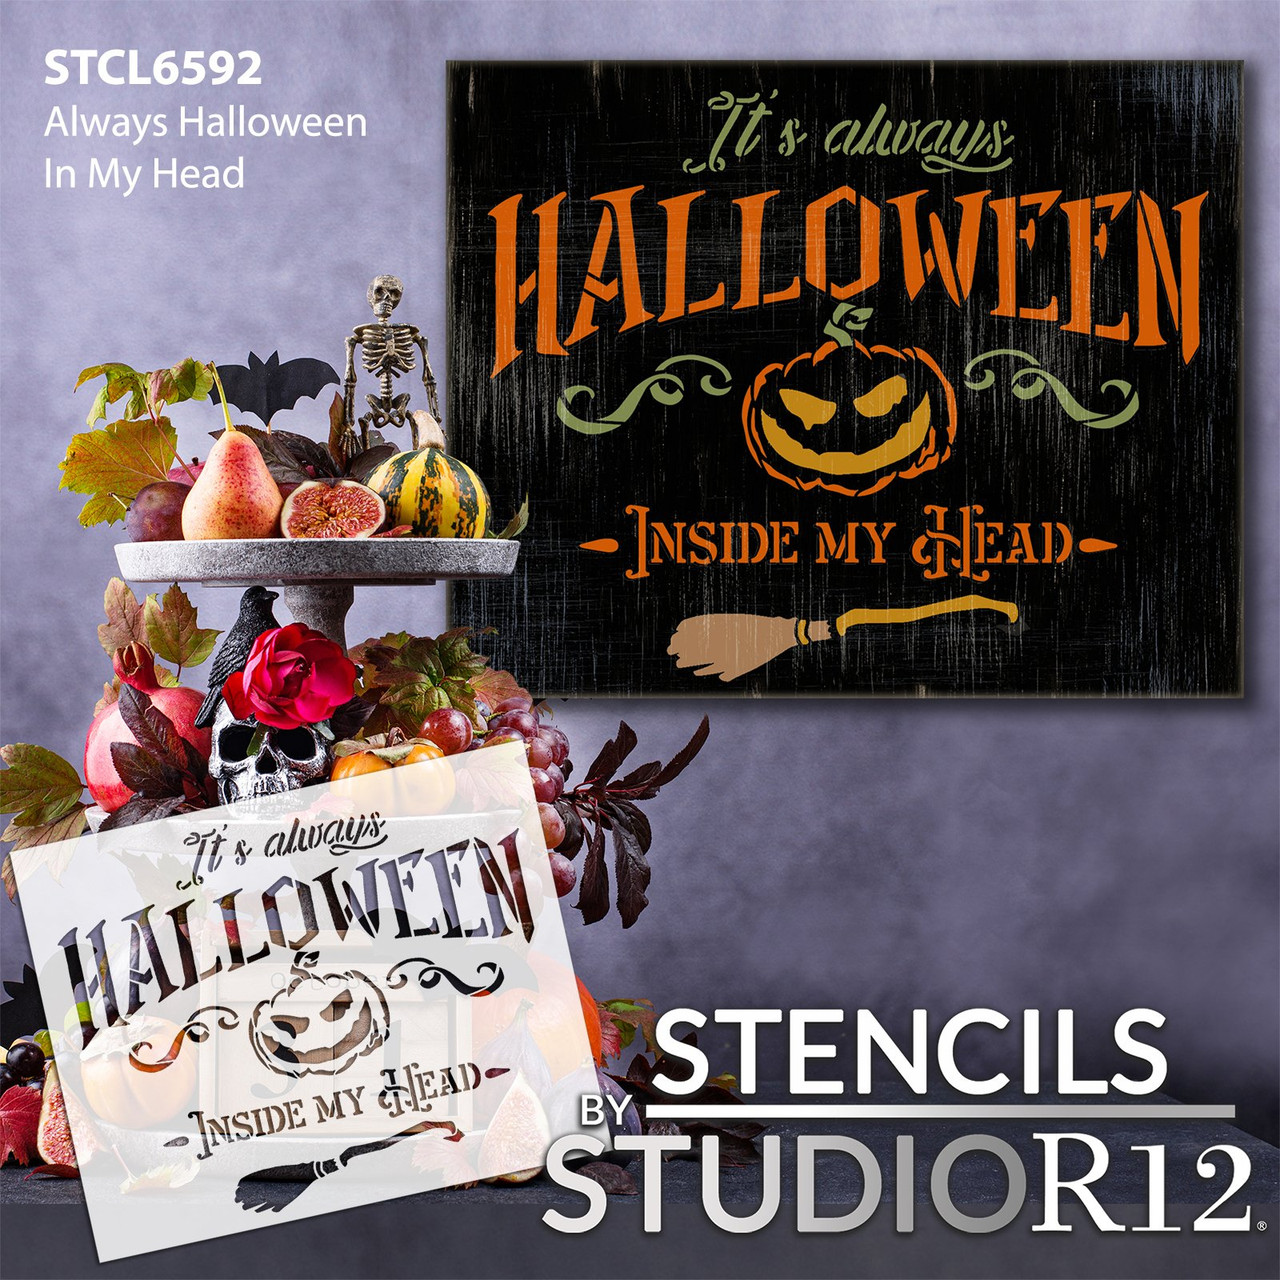 Always Halloween in My Head Stencil by StudioR12 - Select Size - USA Made - Craft DIY Jack o Lantern Pumpkin Home Decor | Paint Halloween Fall Wood Sign | Reusable Mylar Template